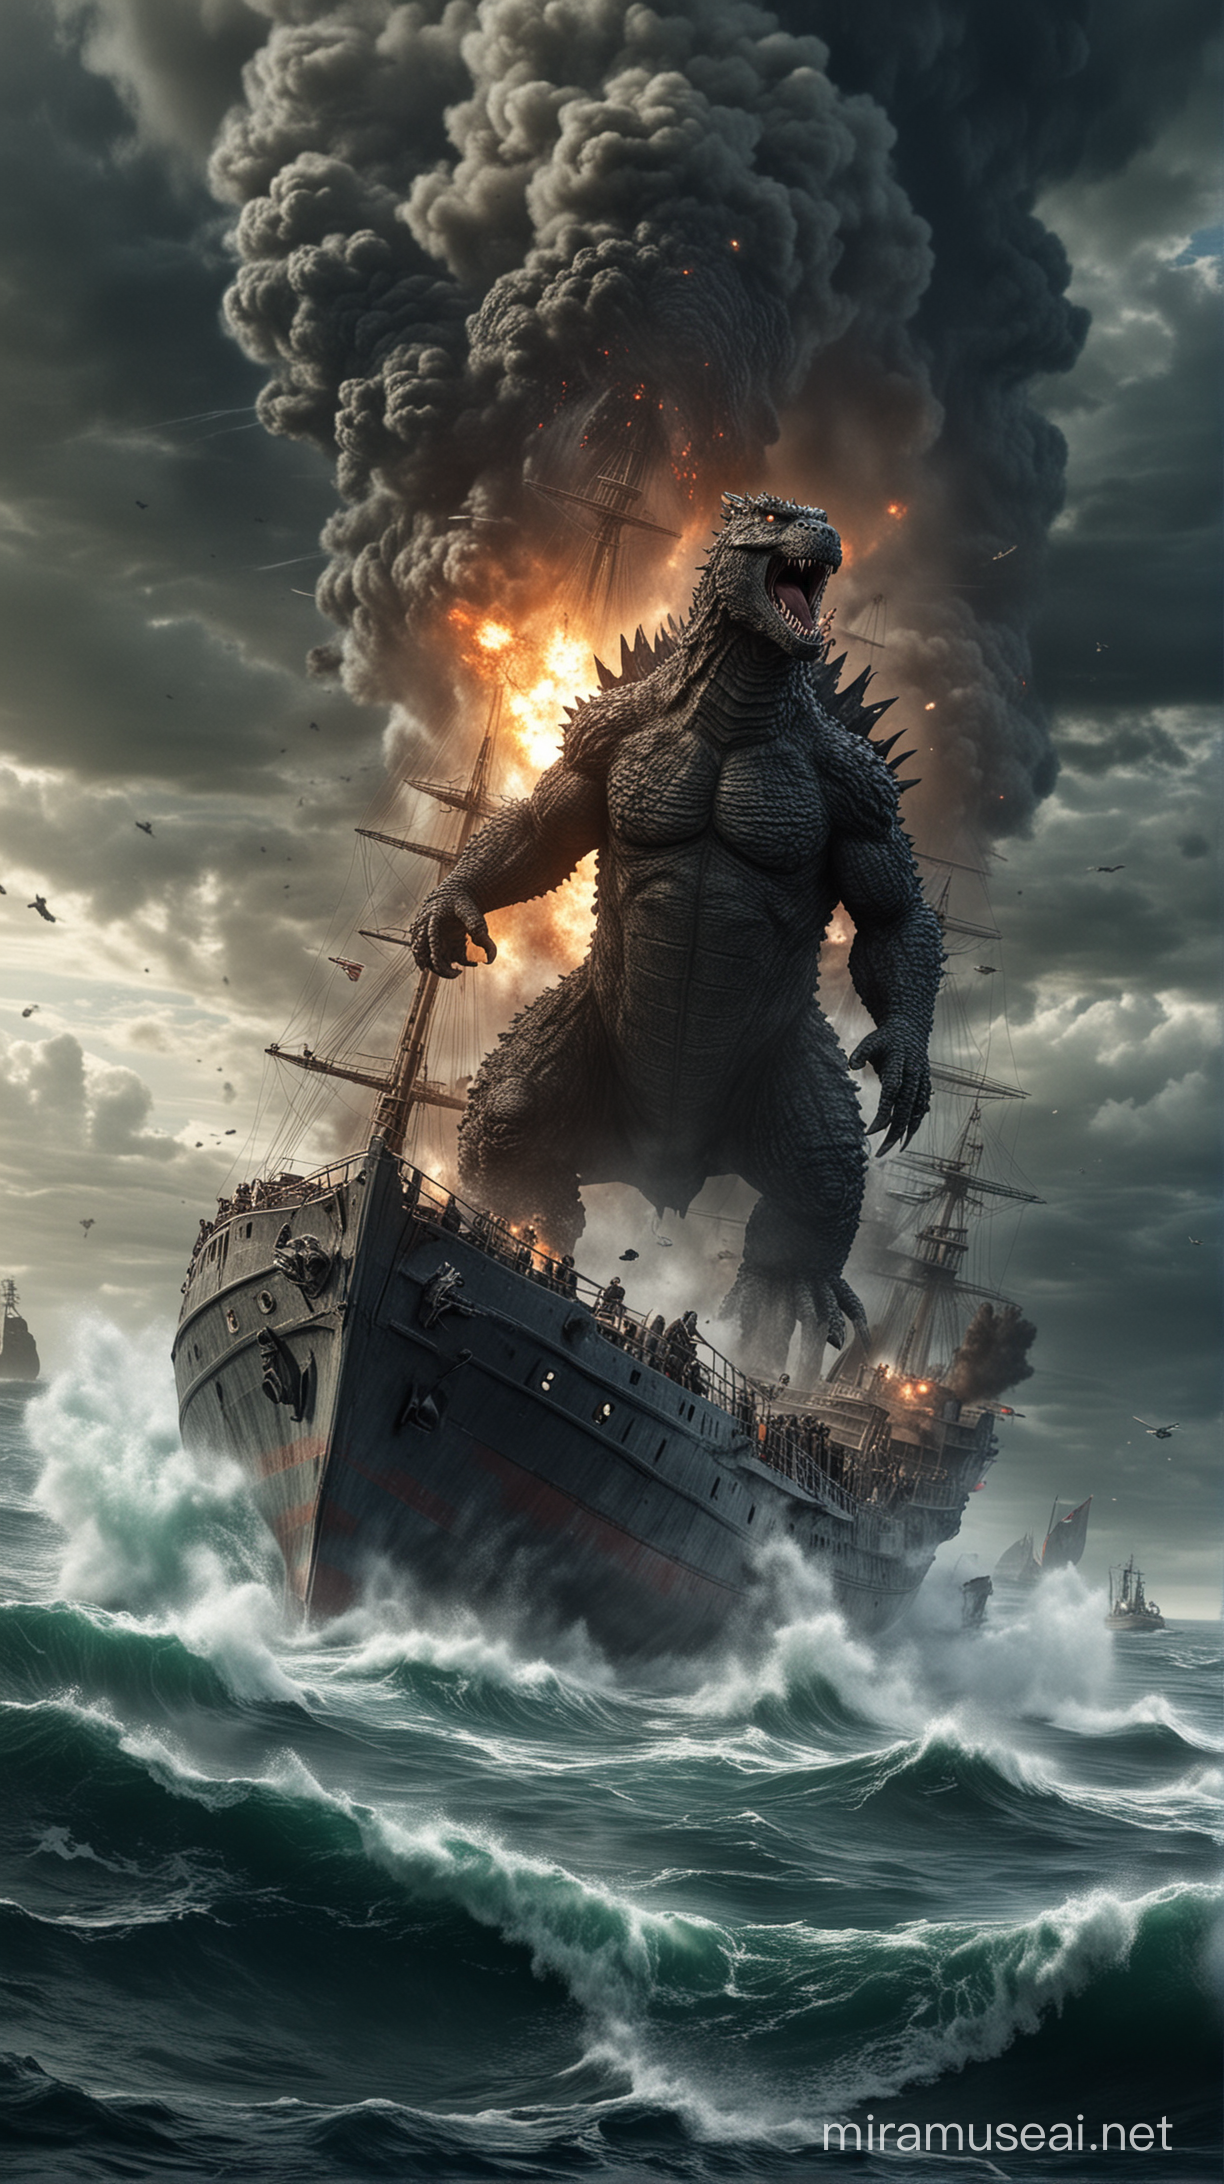 Godzilla attacked the ship in sea